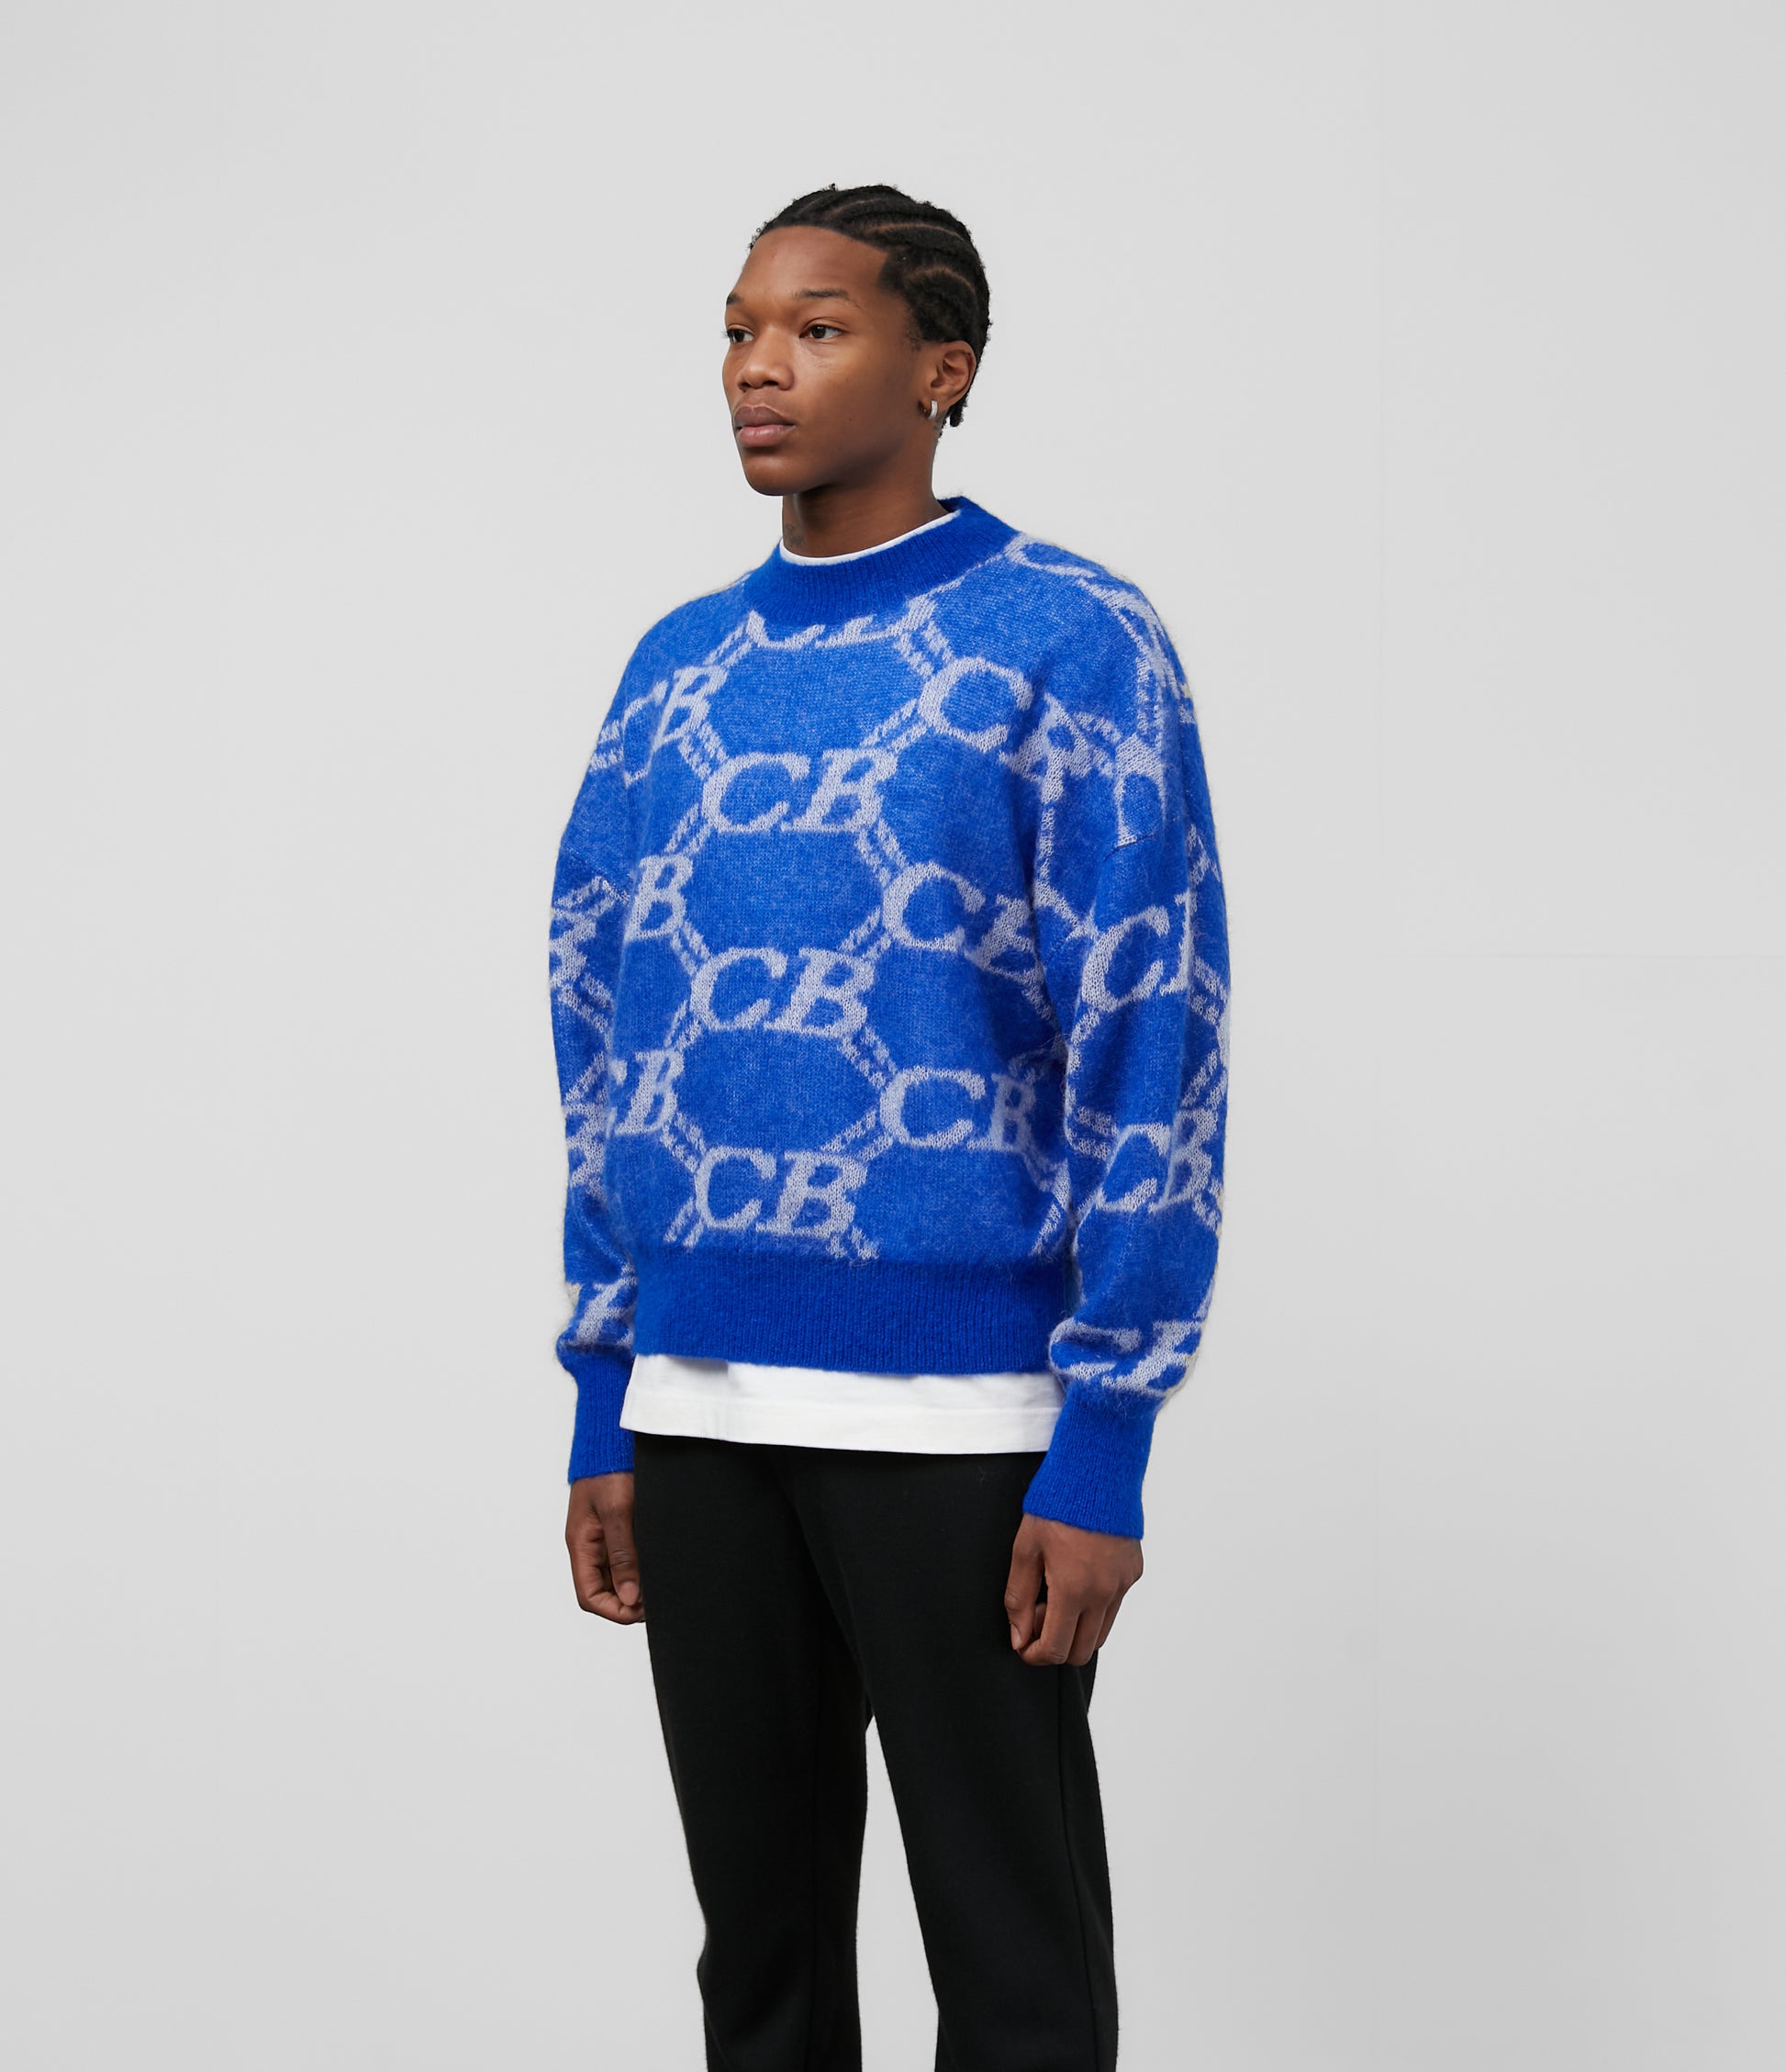 Cole Buxton - CB Monogram Knit Sweater Small / Cobalt Blue For Men